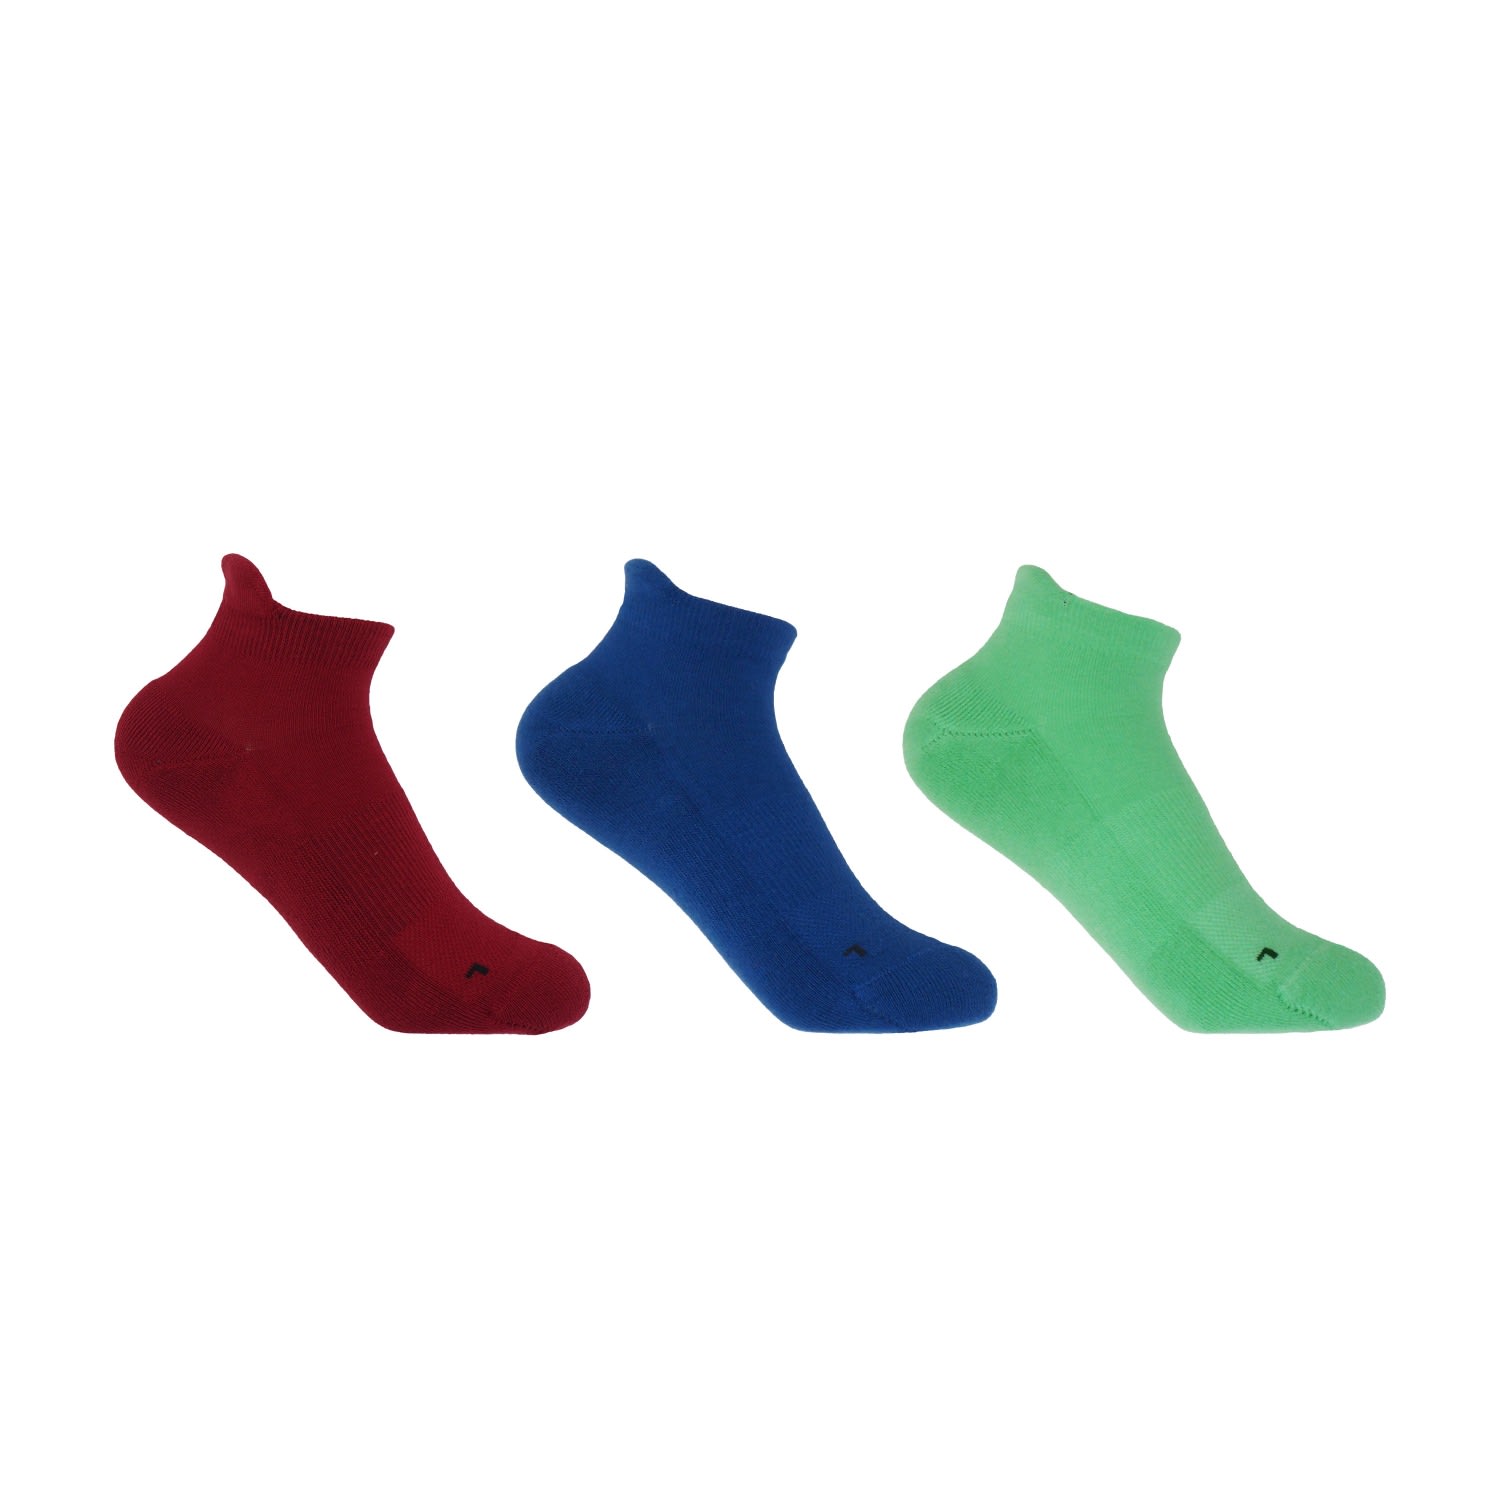 Organic Sport Women’s Trainer Socks Bundle - Burgundy, Blue & Green One Size Peper Harow - Made in England